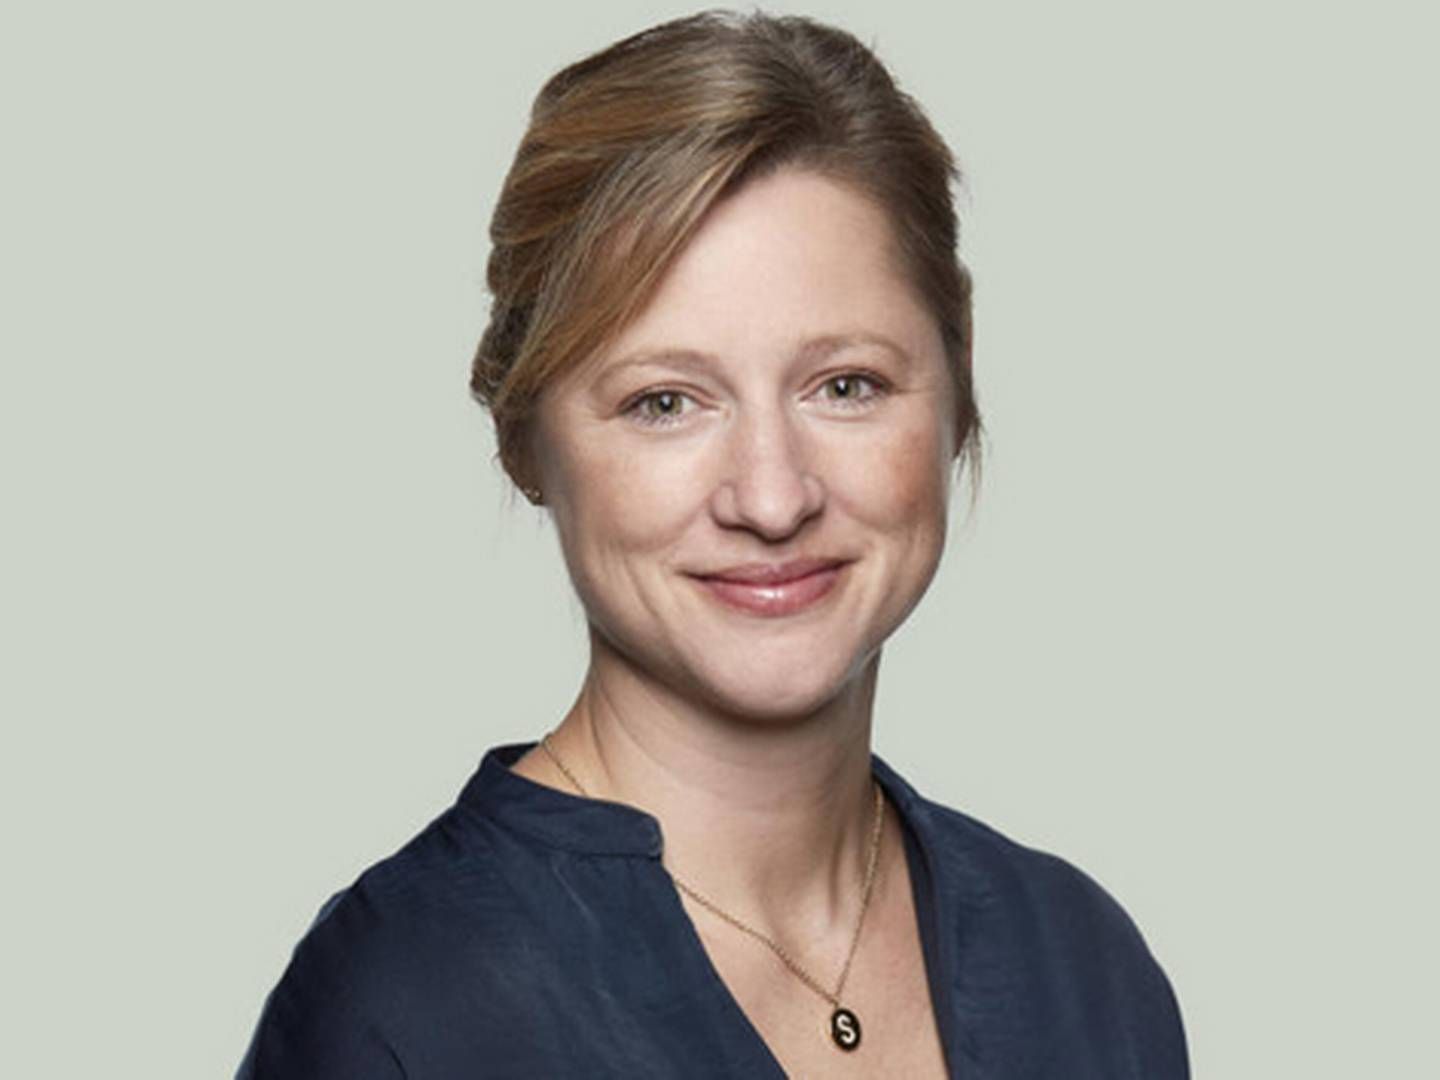 Regionsformand Sophie Hæstorp Andersen | Foto: PR/Bjarke MacCarthy for Socialdemokratiet